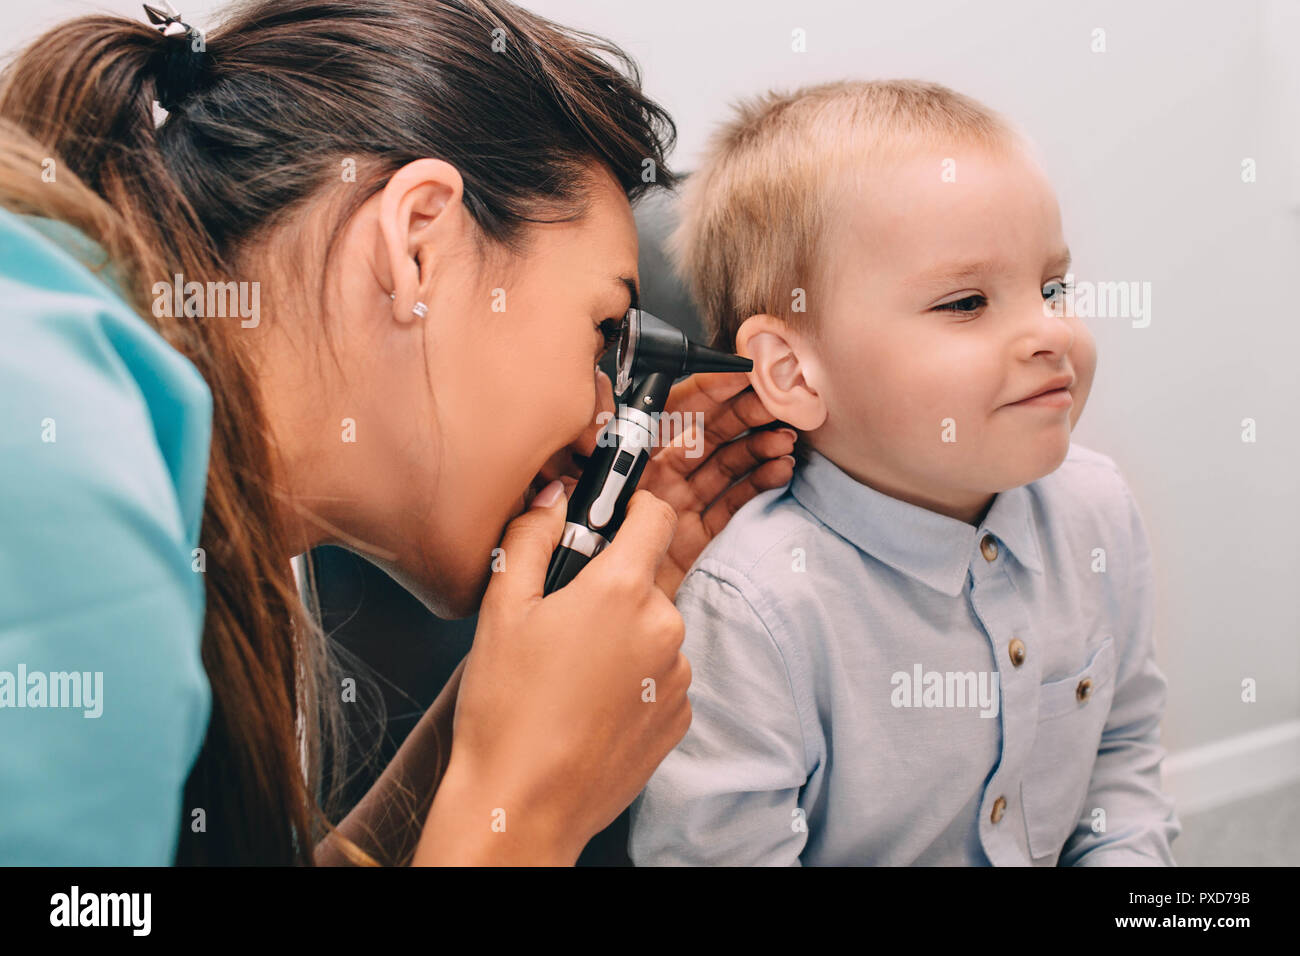 Smiling little boy having ear exam with otoscope Stock Photo